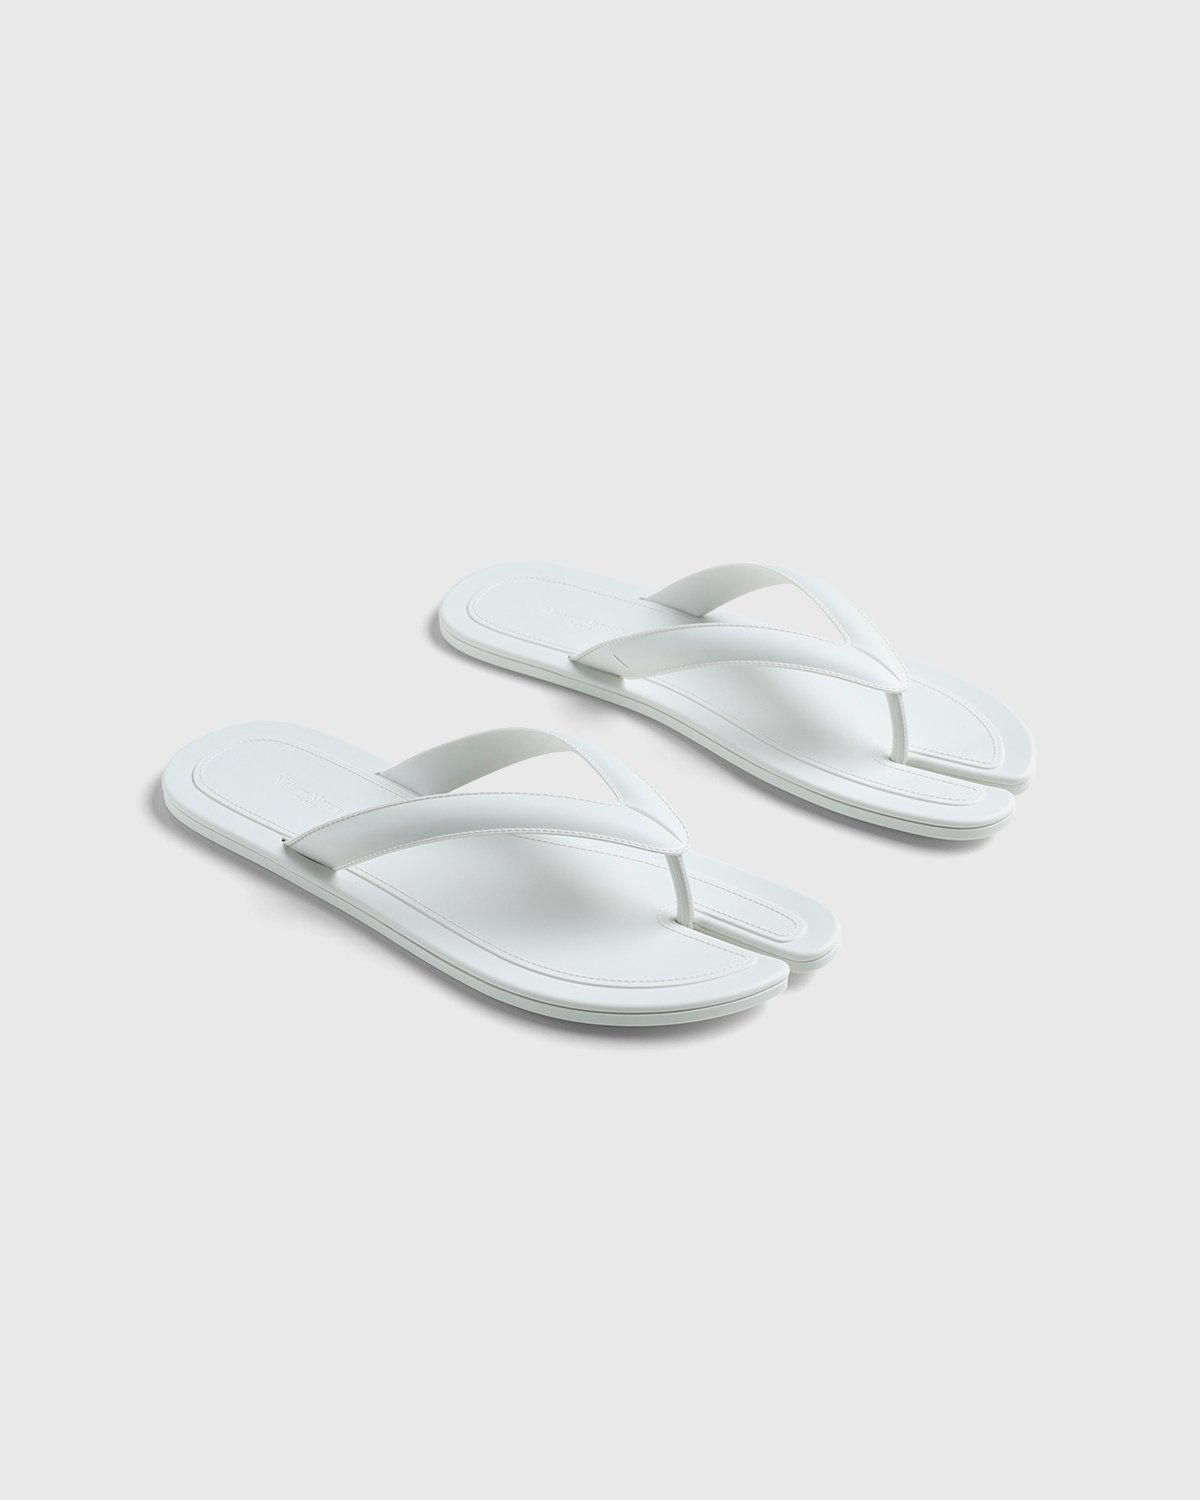 Maison Margiela - Tabi Flip-Flops White - Footwear - White - Image 8